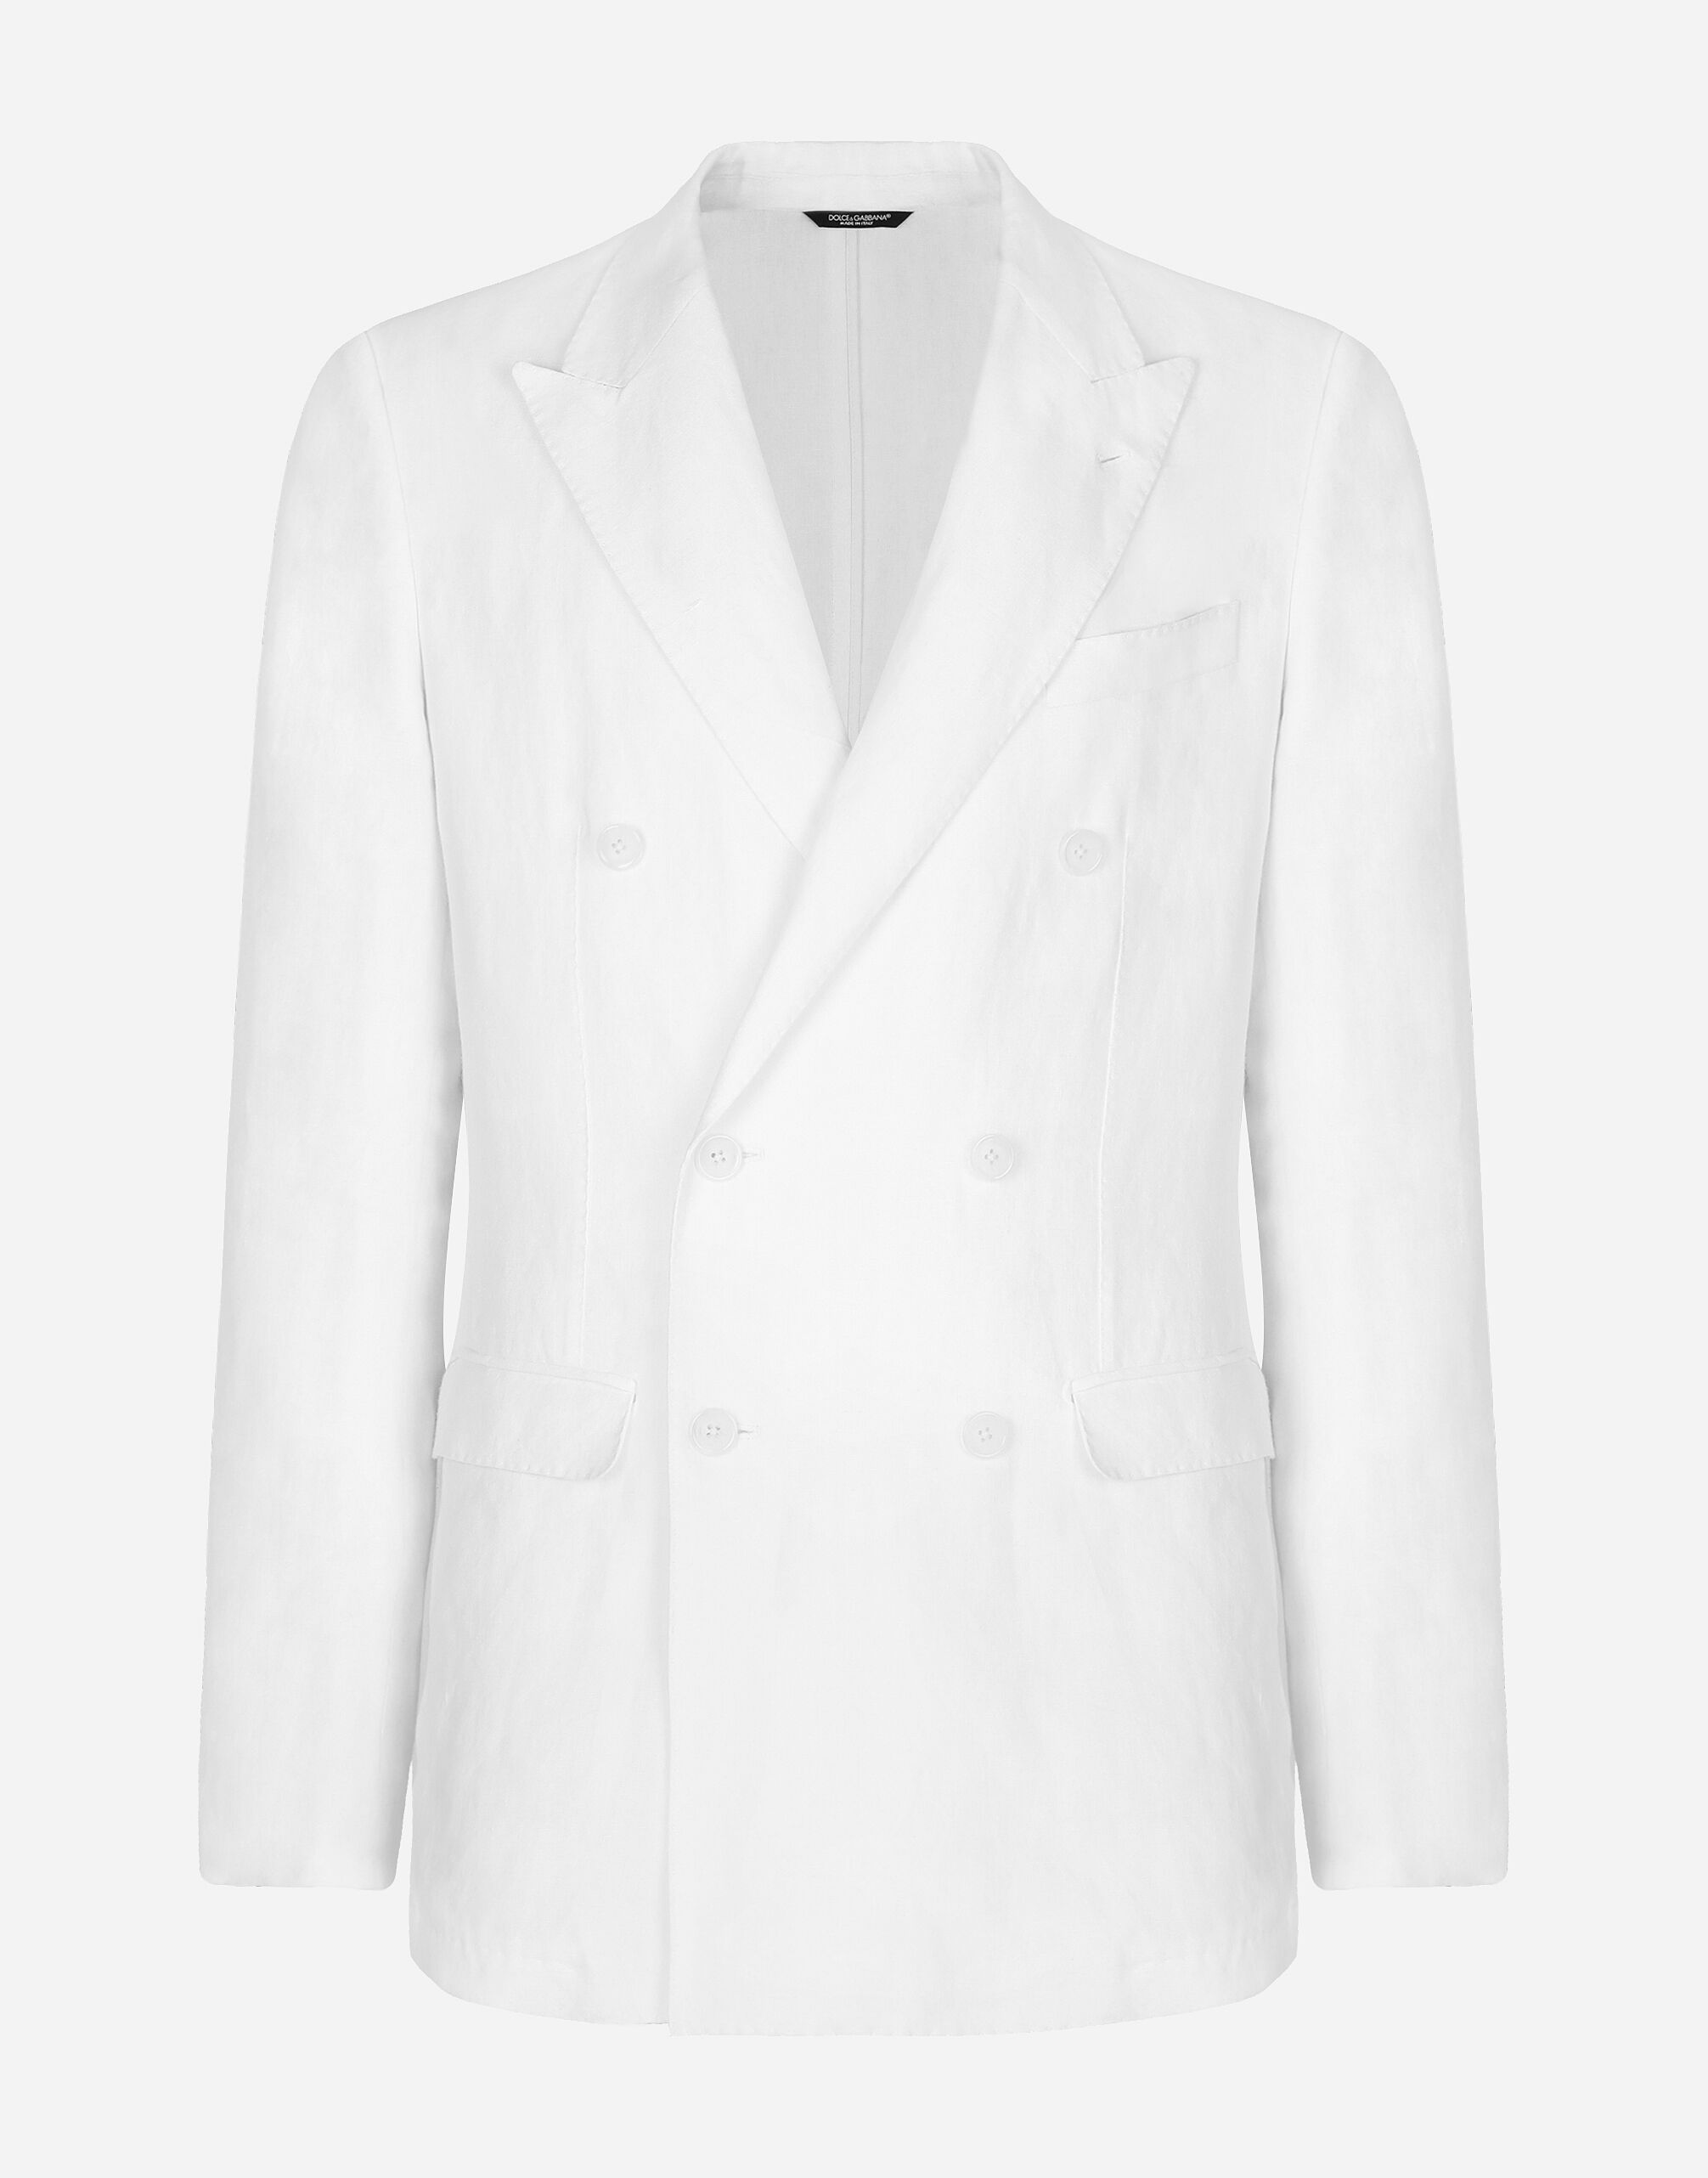 Dolce & Gabbana Double-breasted linen Taormina jacket Beige G2SV7THLMGE